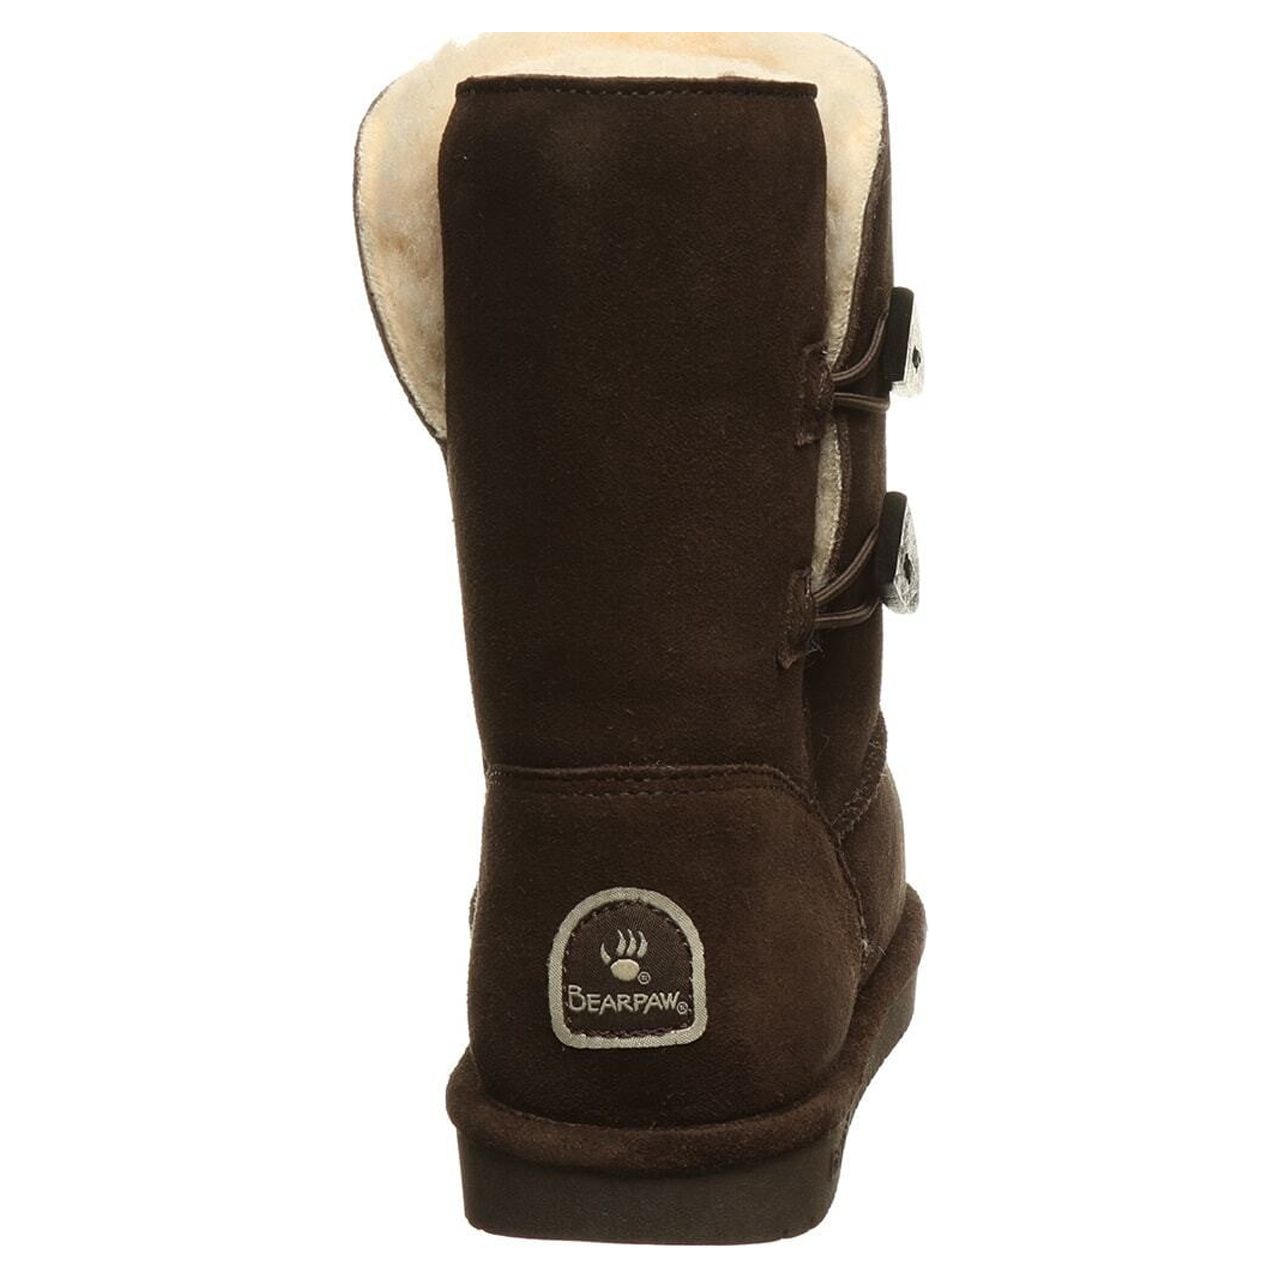 Bearpaw Women's Chocolate II Abigail Boots, Size 11 - image 5 of 6